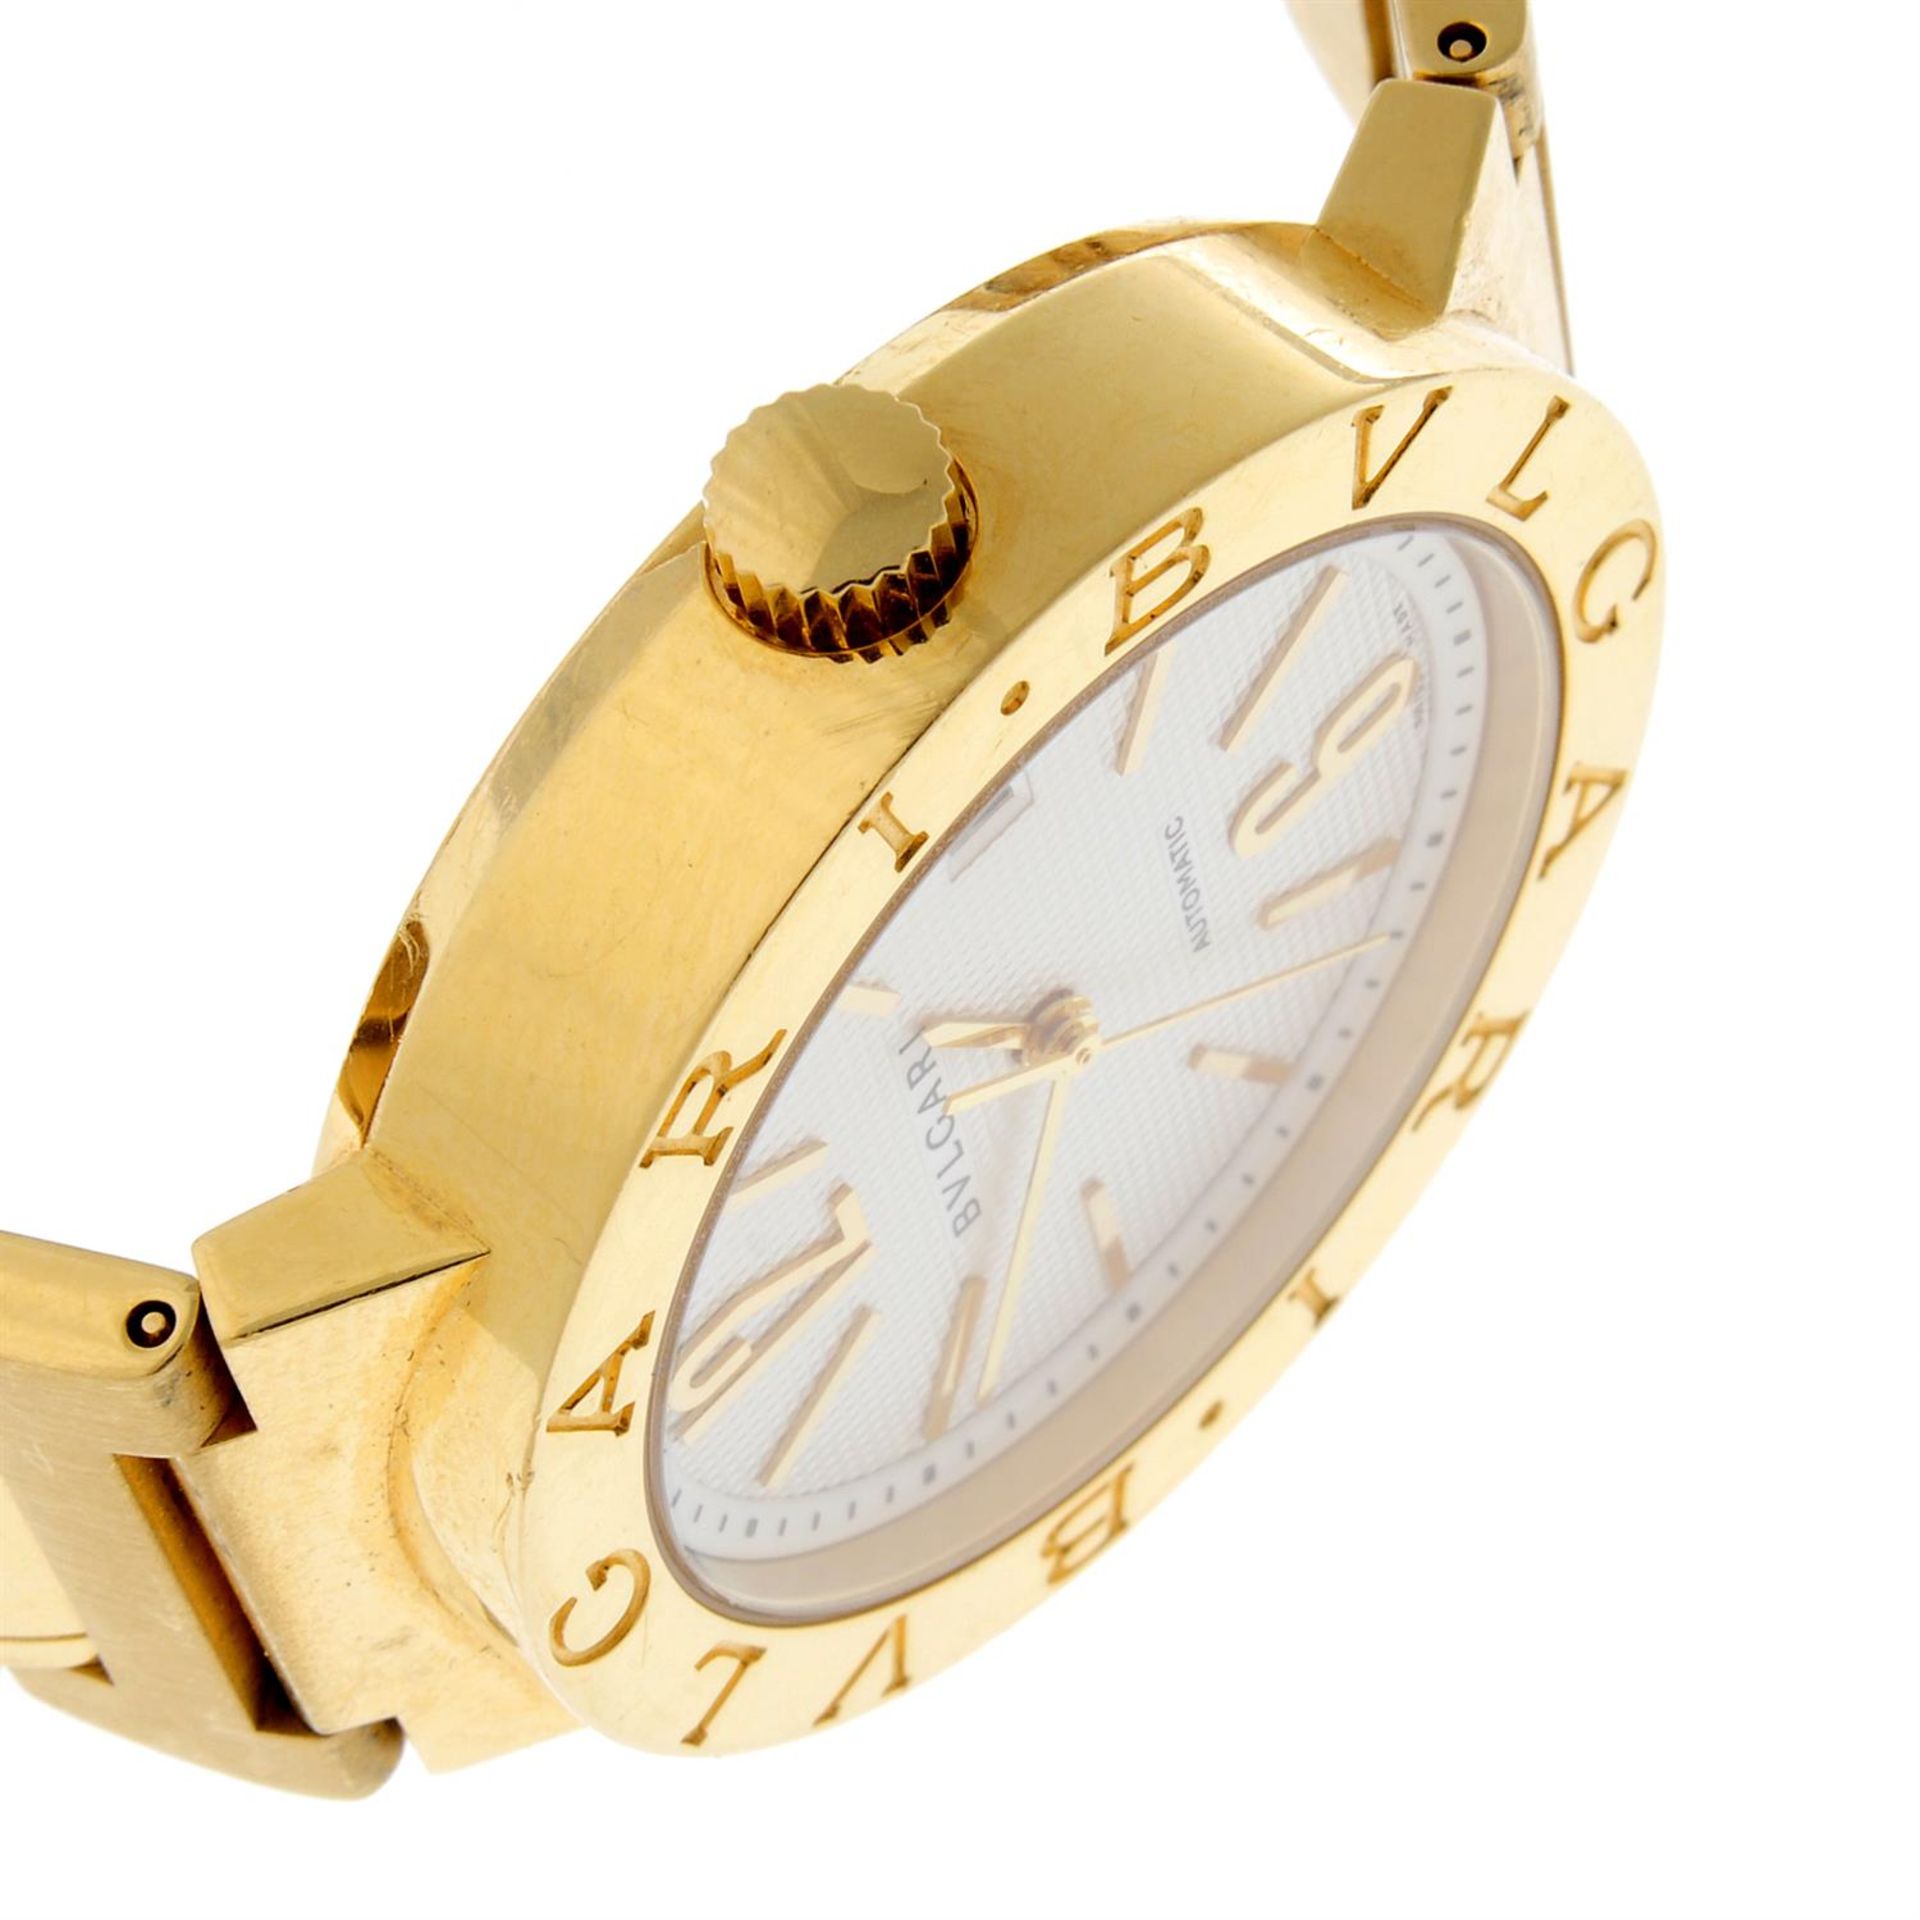 BULGARI - an 18ct yellow gold Diagono bracelet watch, 38mm. - Image 3 of 5